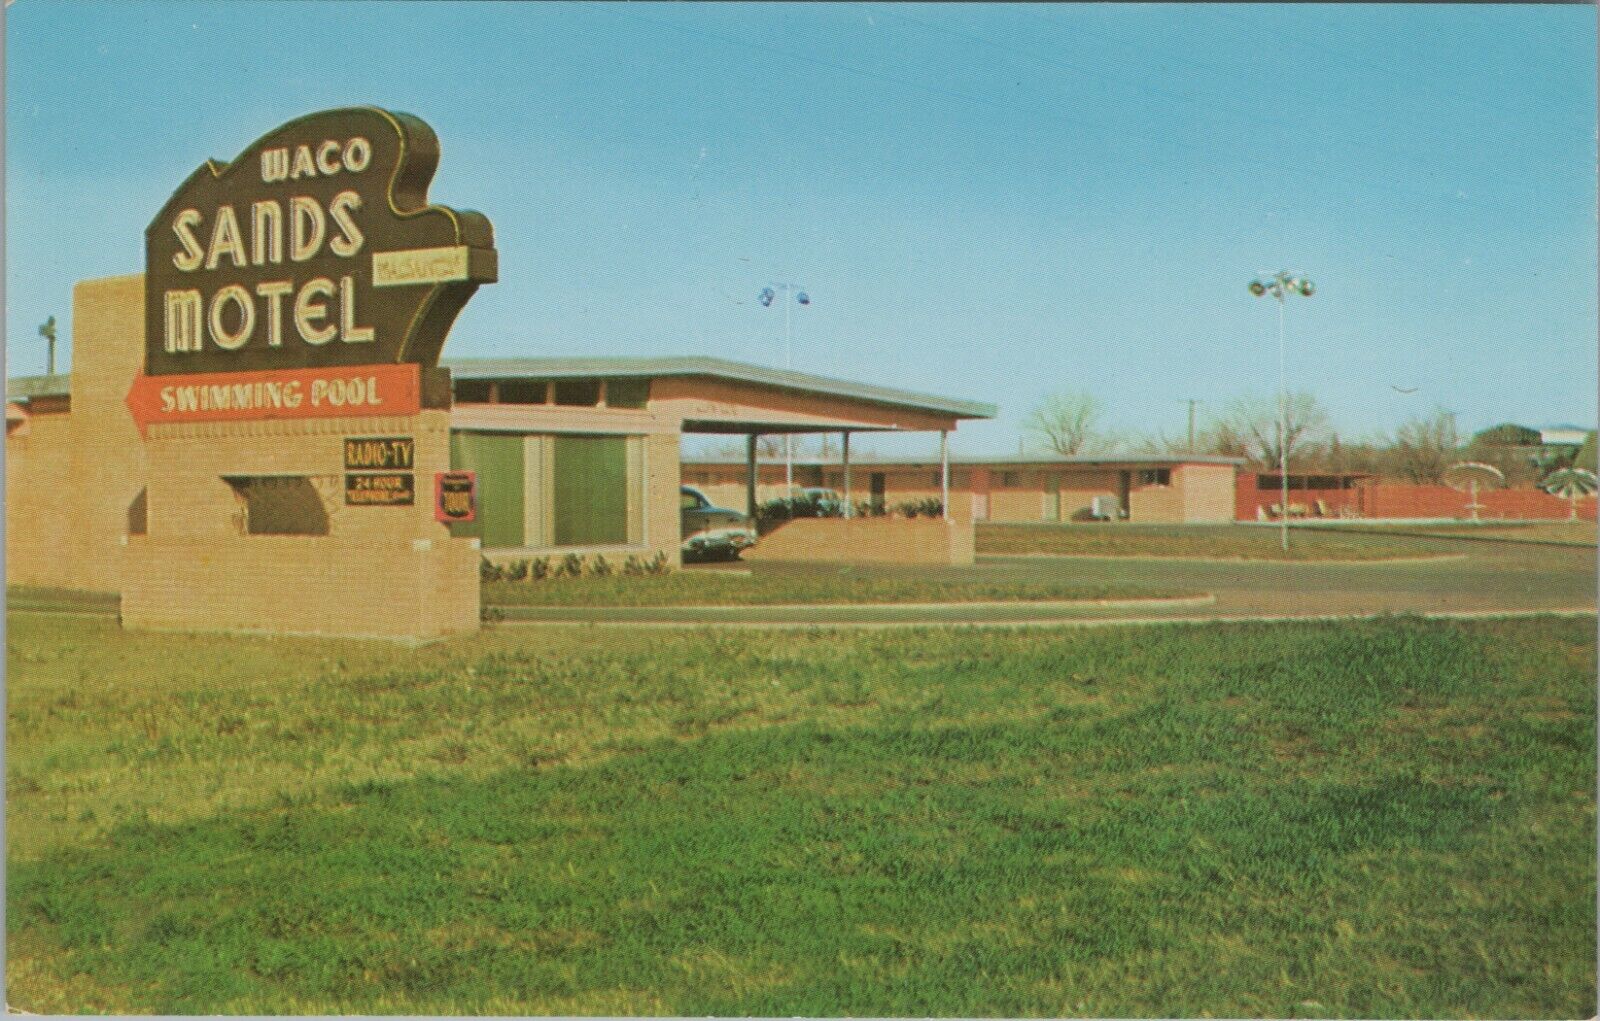 Sands Motel Waco Texas auto exterior highway 77 81 c1960s postcard A874